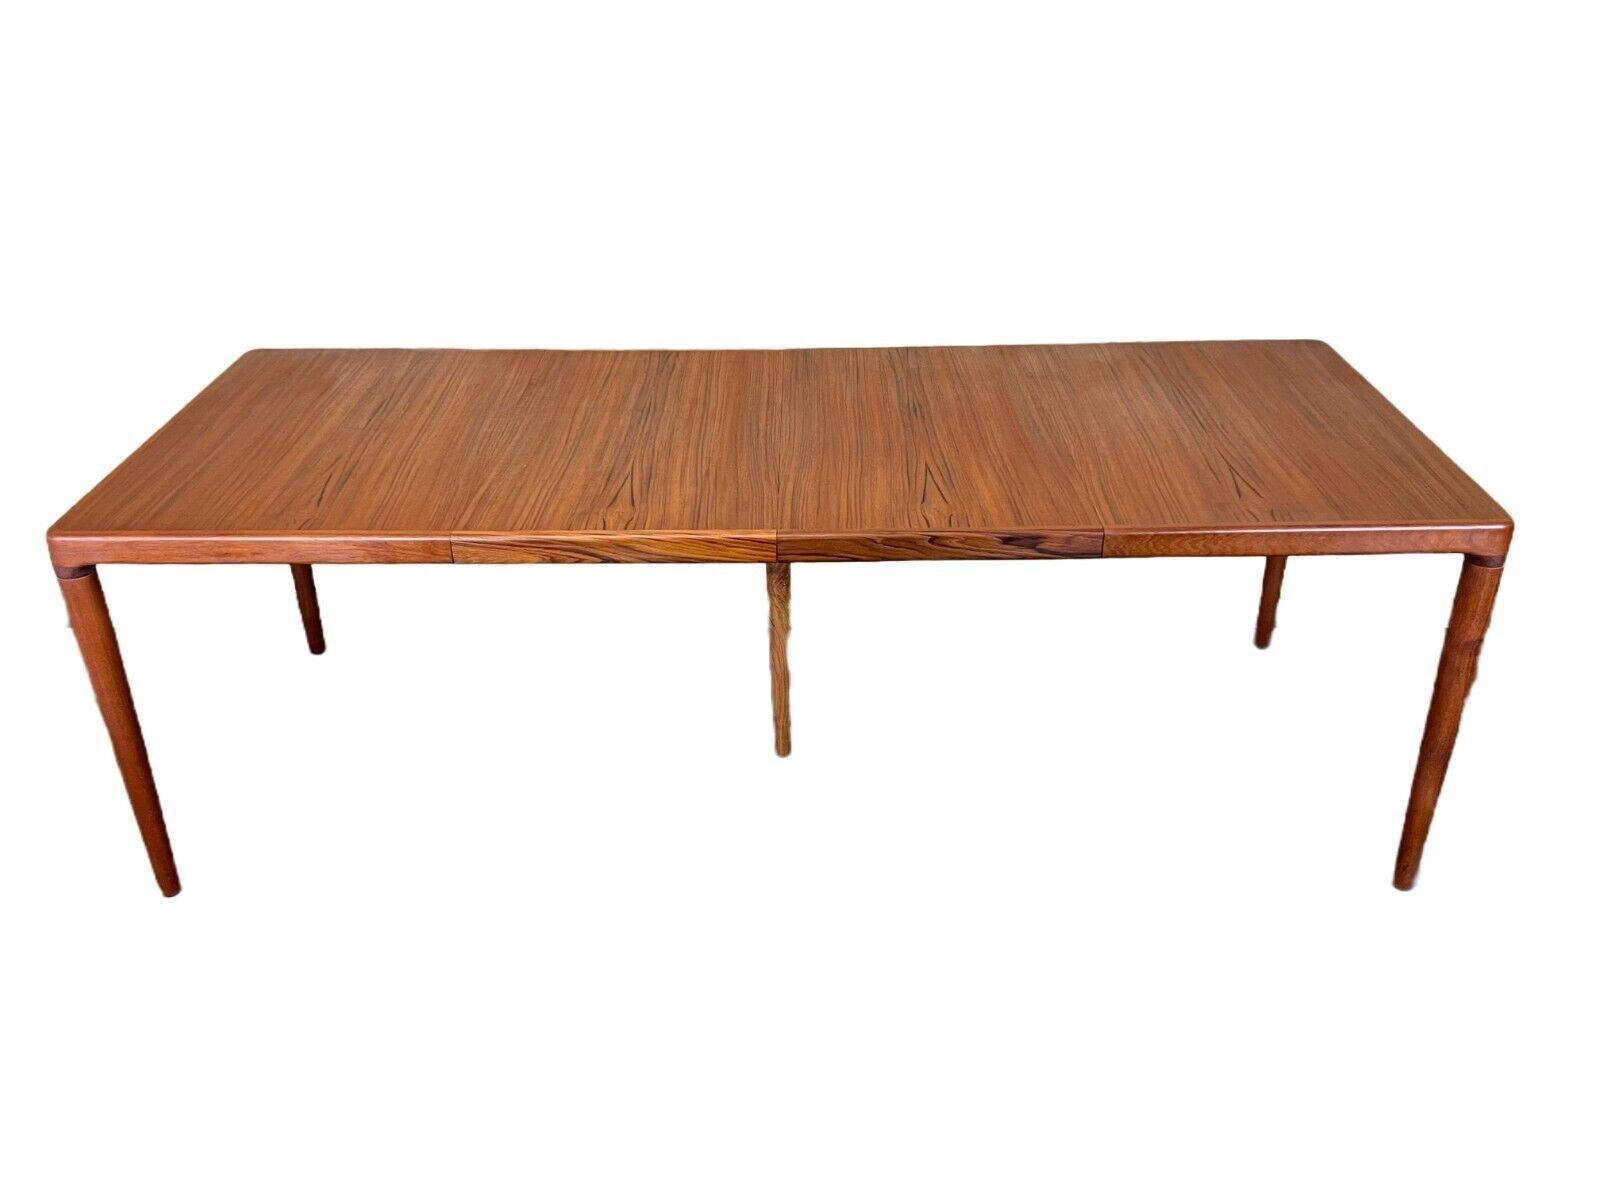 60s 70s teak dining table Danish Modern Design Denmark 60s 70s

Object: dining table / dining table

Manufacturer:

Condition: good - vintage

Age: around 1960-1970

Dimensions:

Width = 225.5cm
Depth = 90cm
Height = 72.5cm
Insert